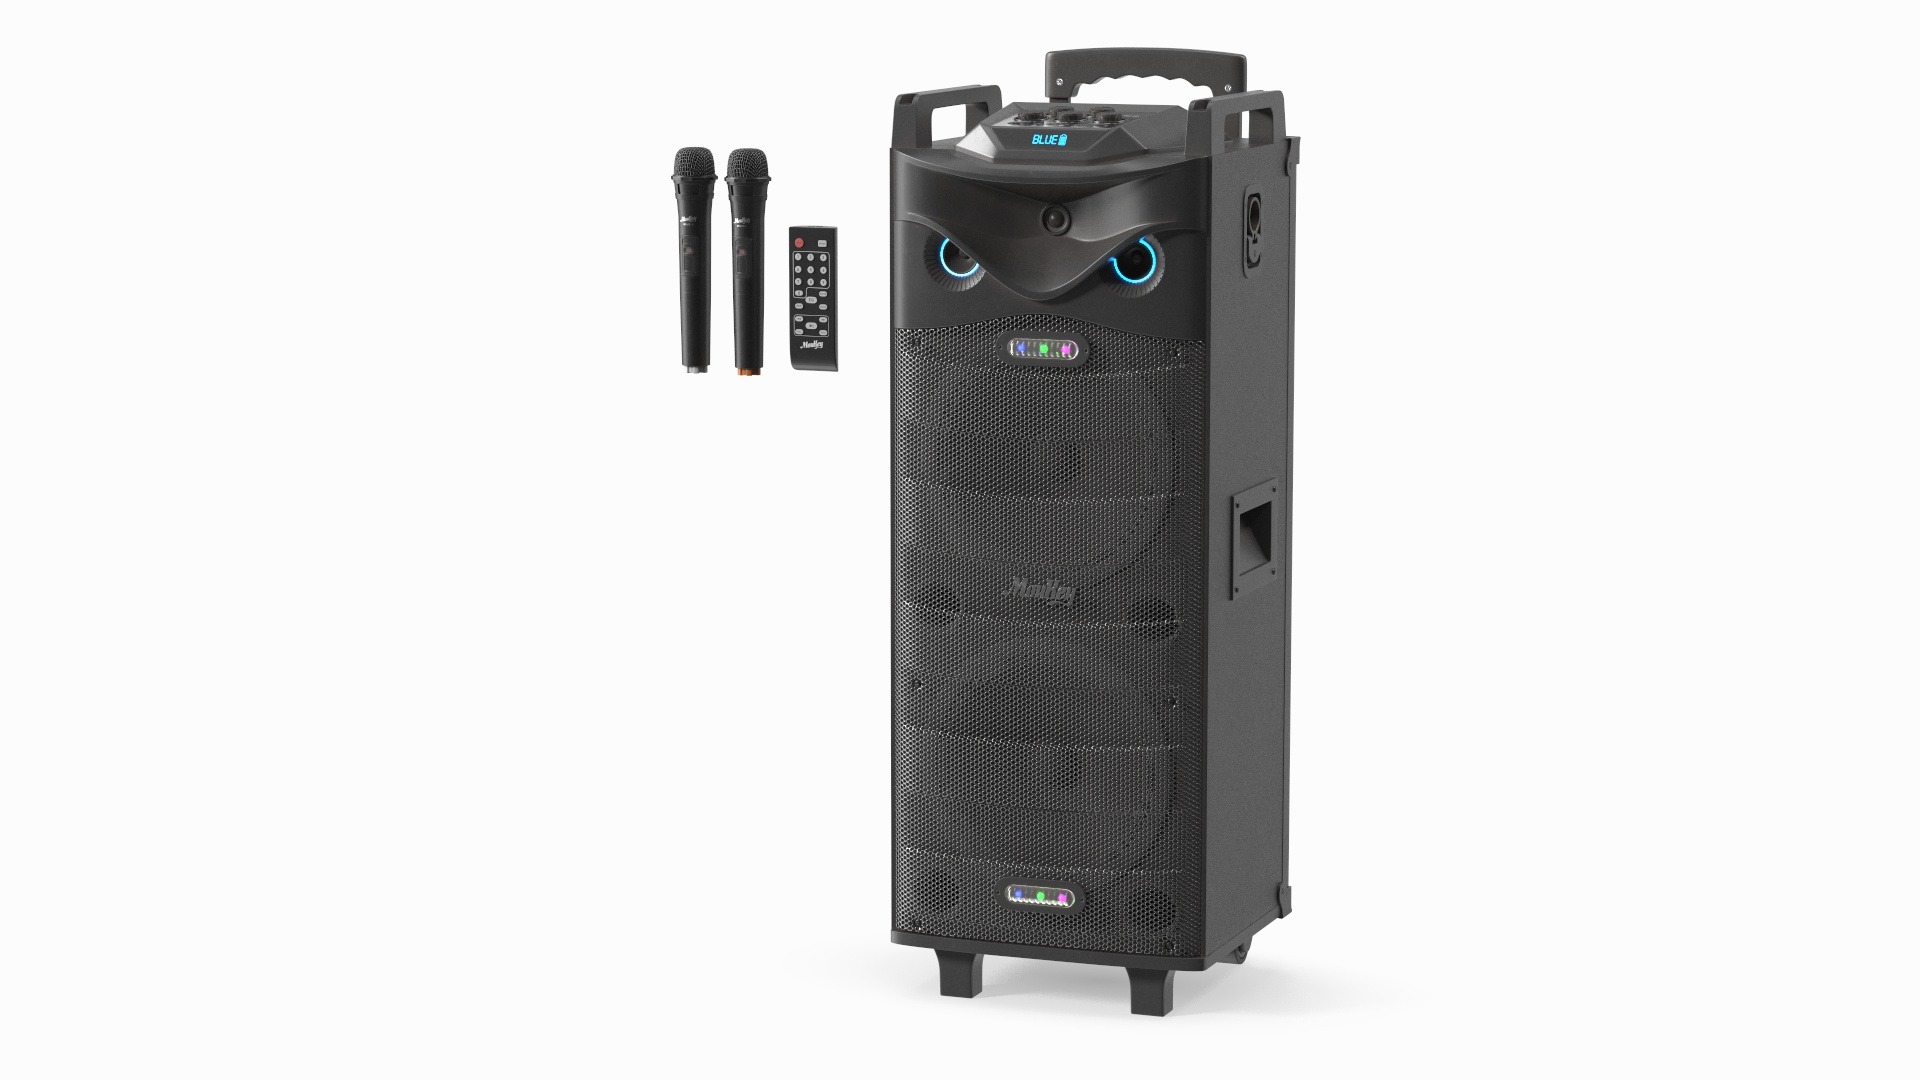 Moukey Karaoke Machine Speaker Portable Karaoke System for Home